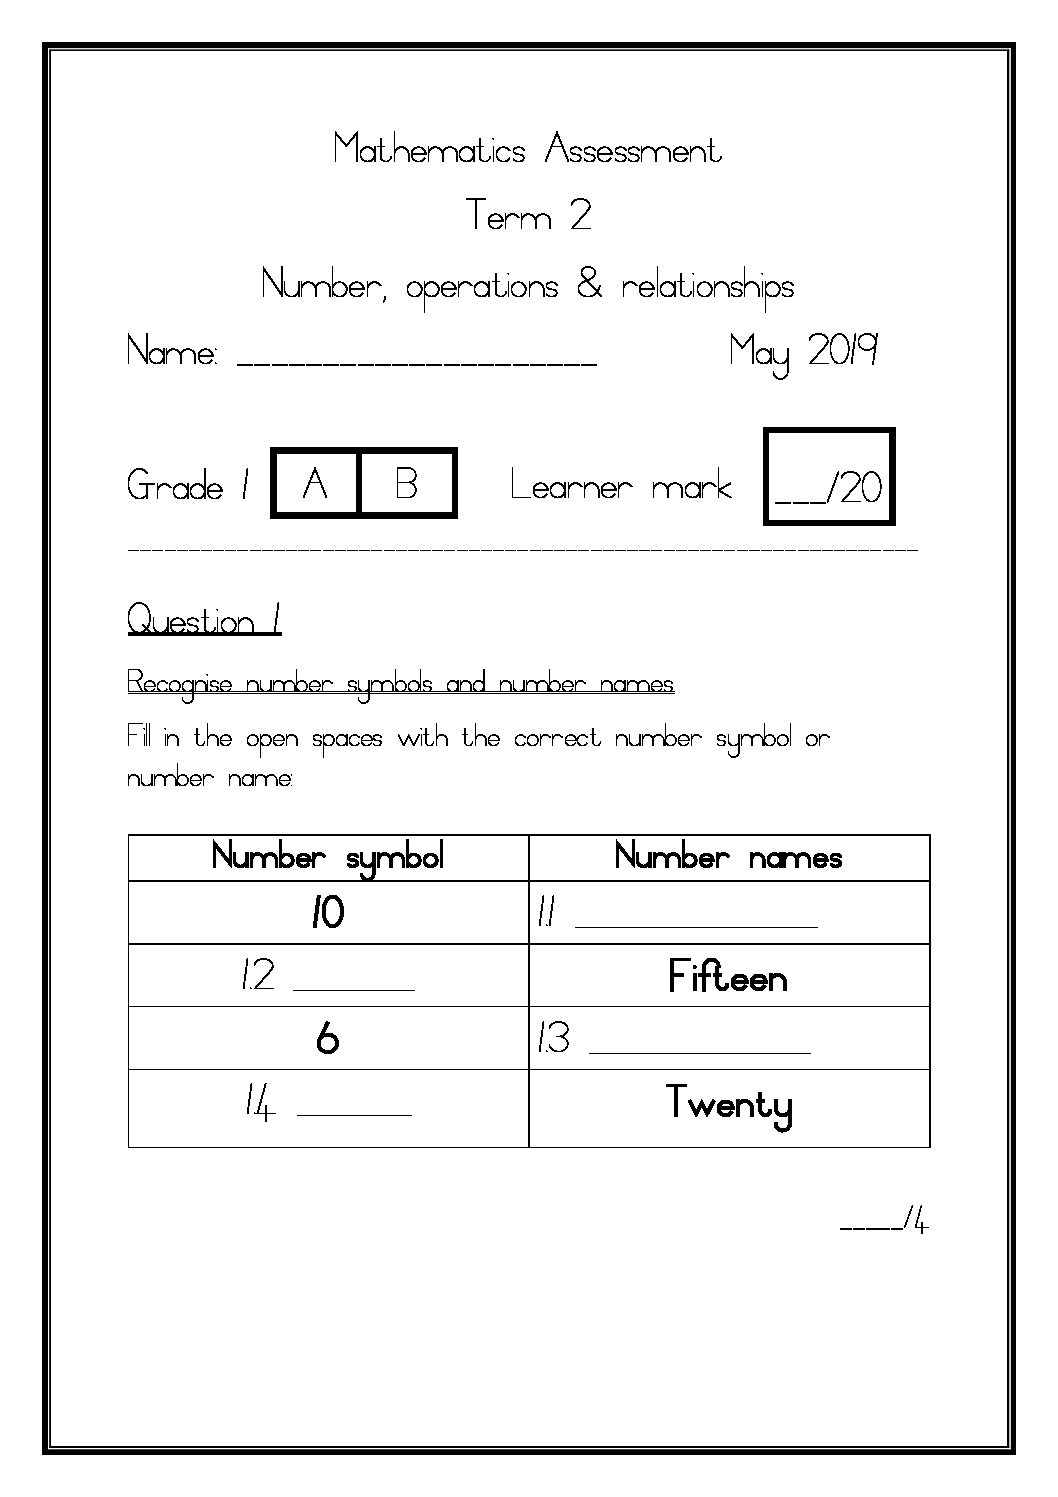 Number Operations Relationship Assessment Teacha 